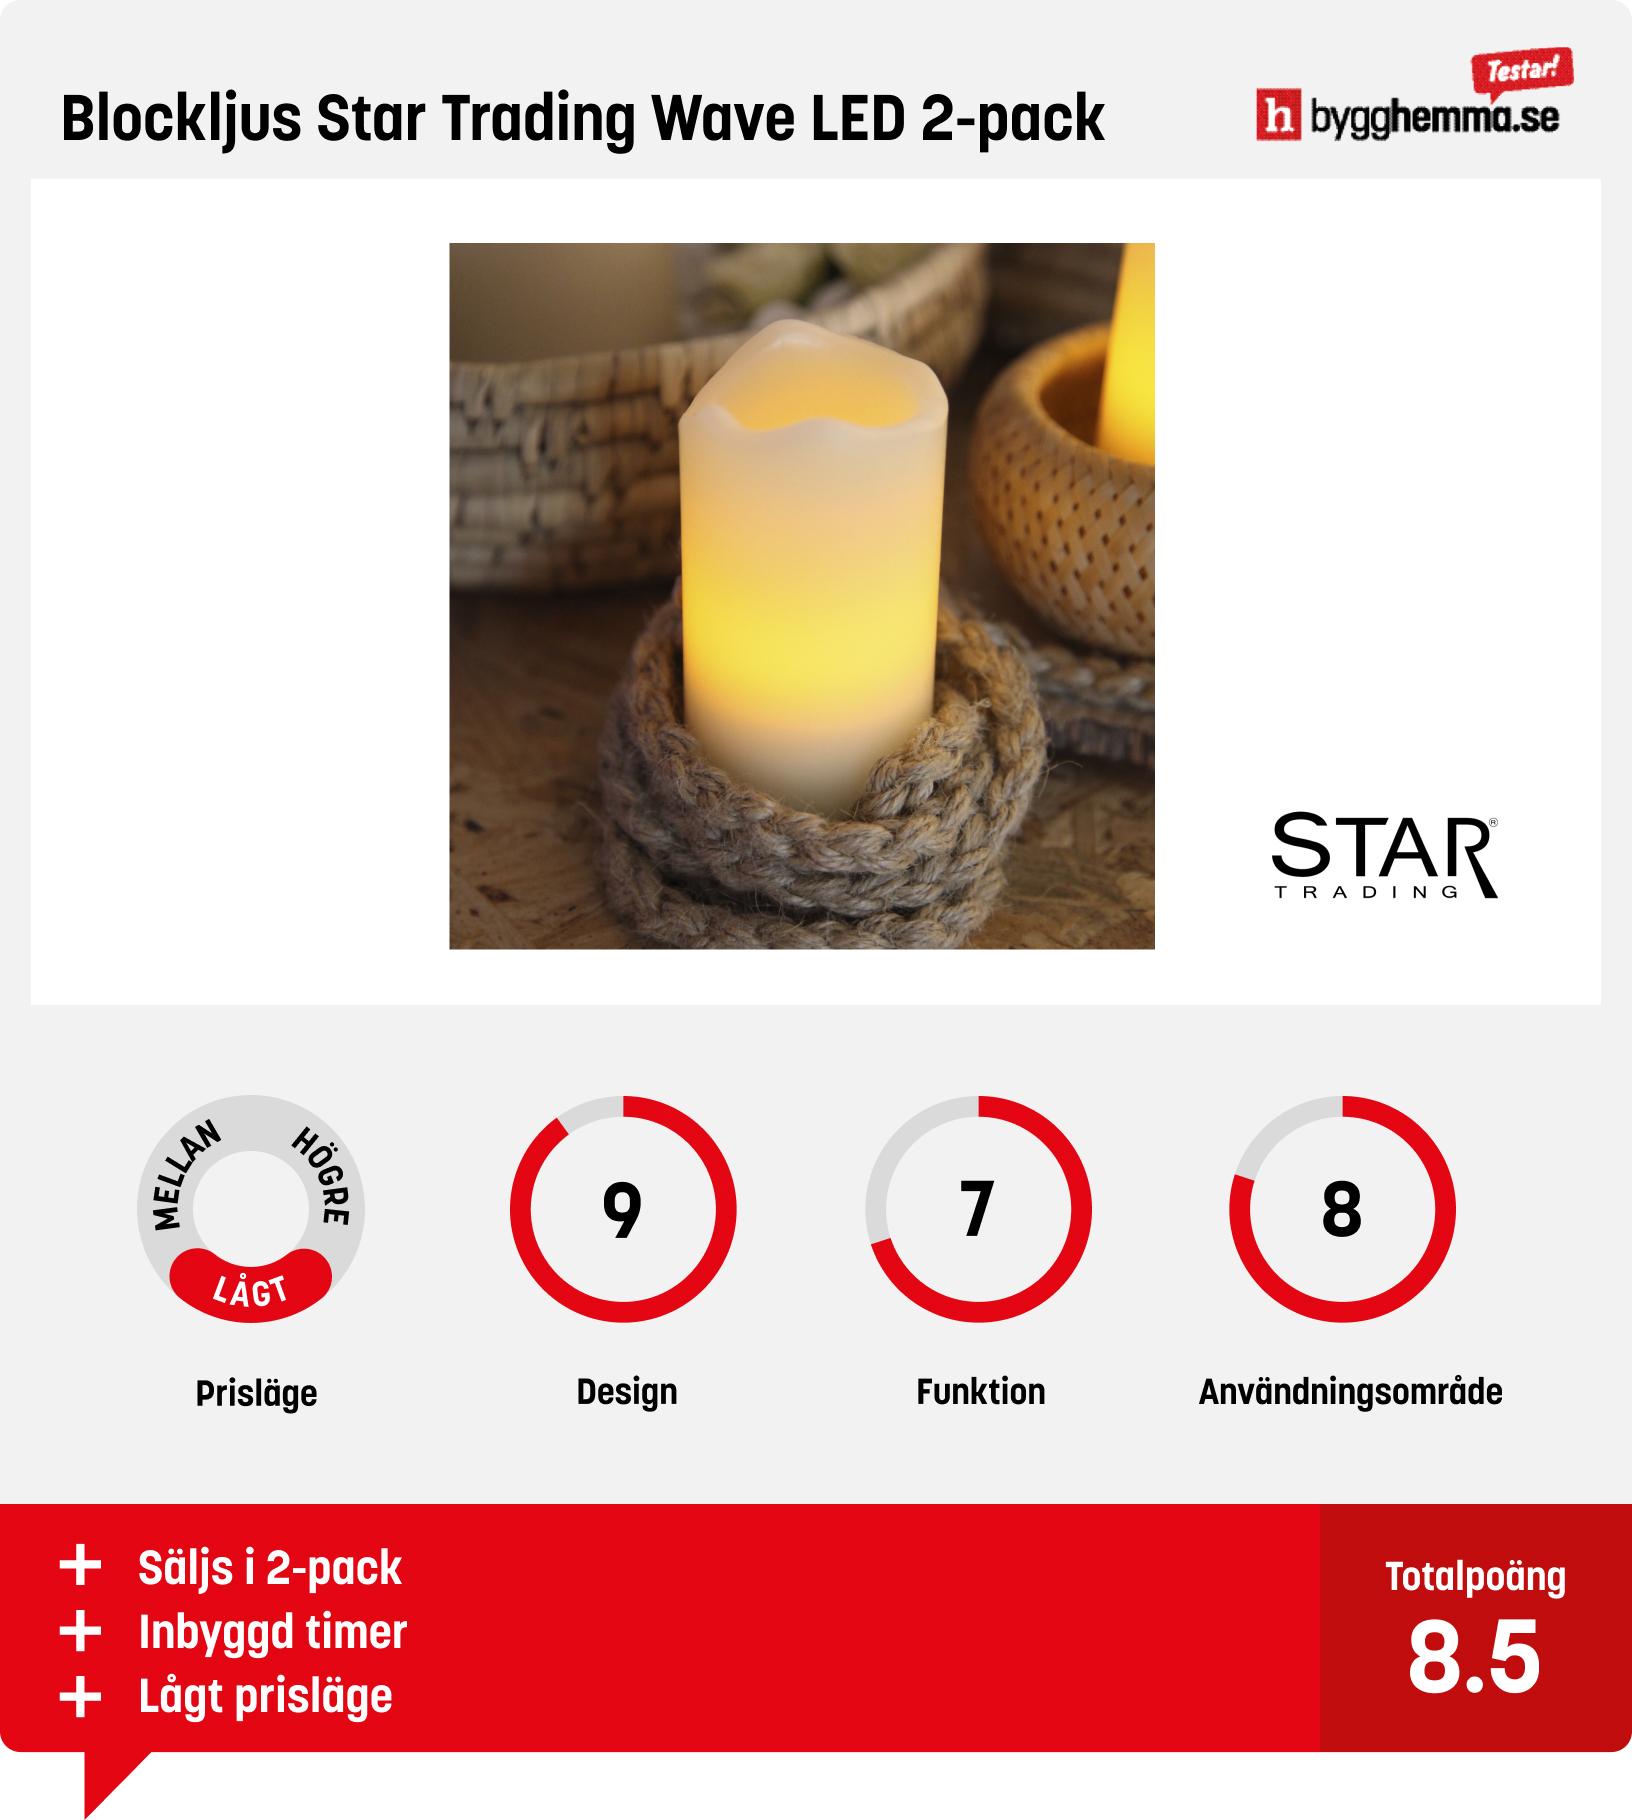 Blockljus LED bäst i test - Blockljus Star Trading Wave LED 2-pack